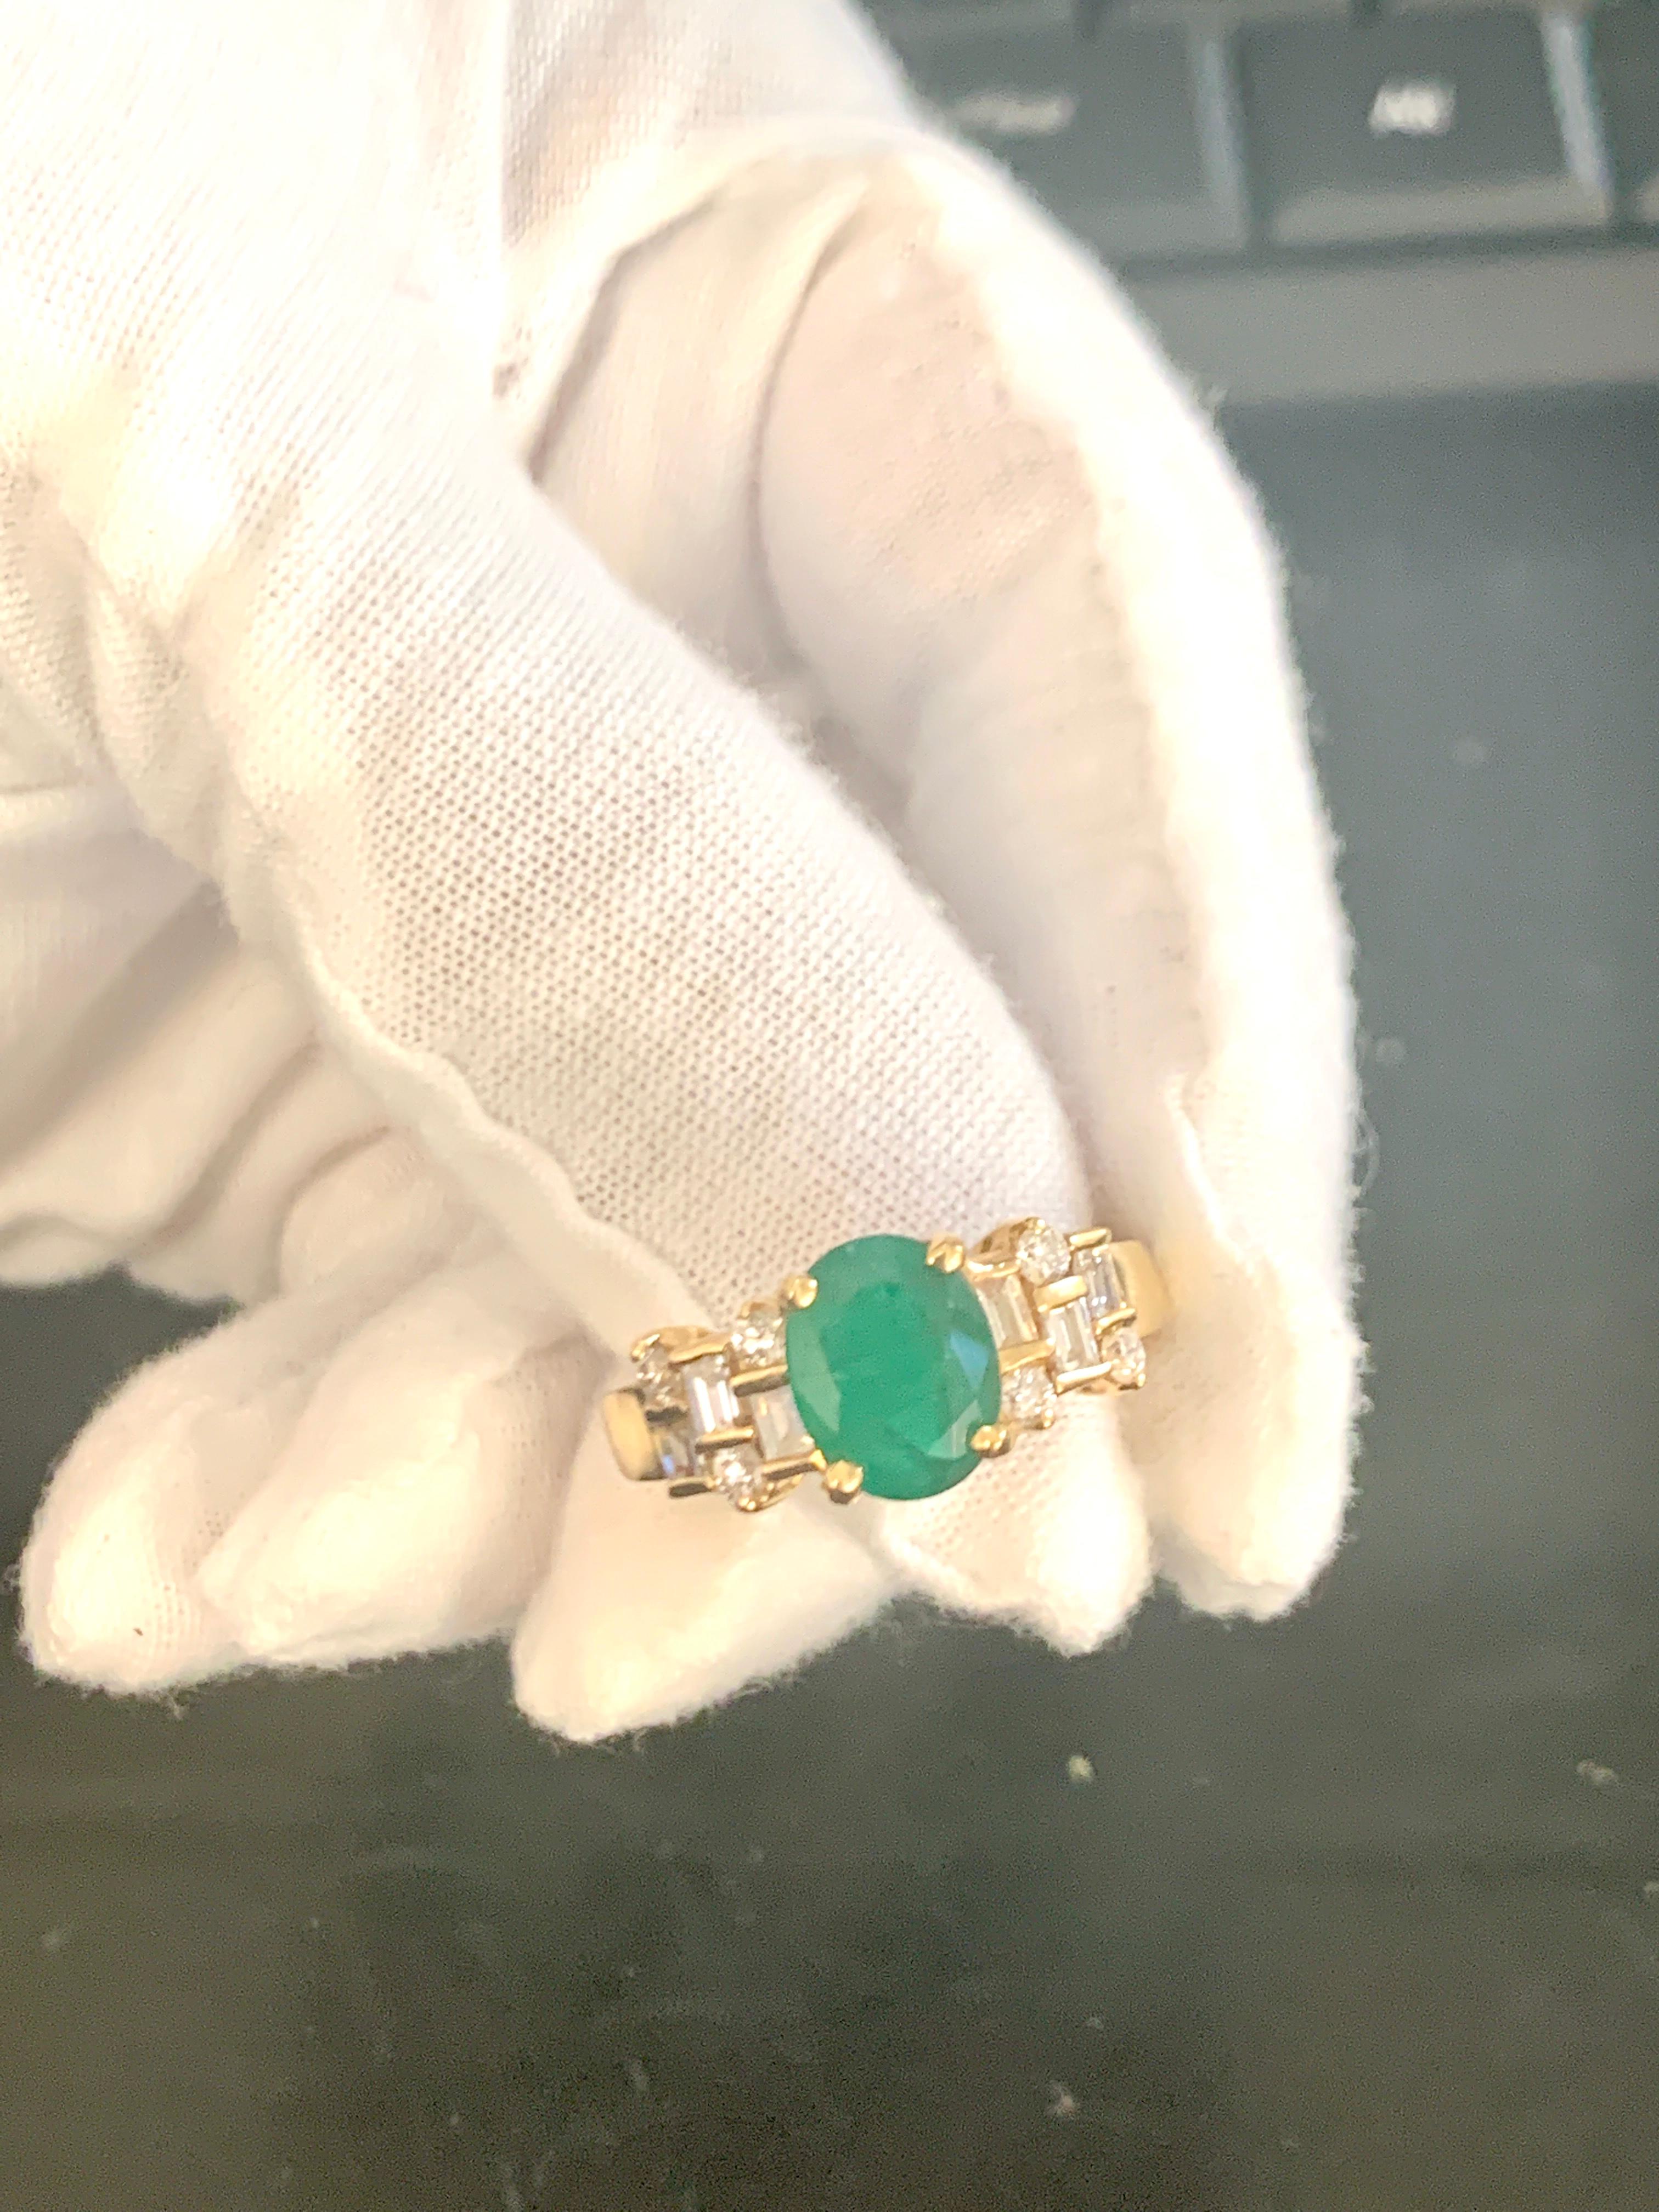 2 Carat Oval Cut Emerald and 0.5 Carat Diamond Ring 18 Karat Yellow Gold For Sale 3